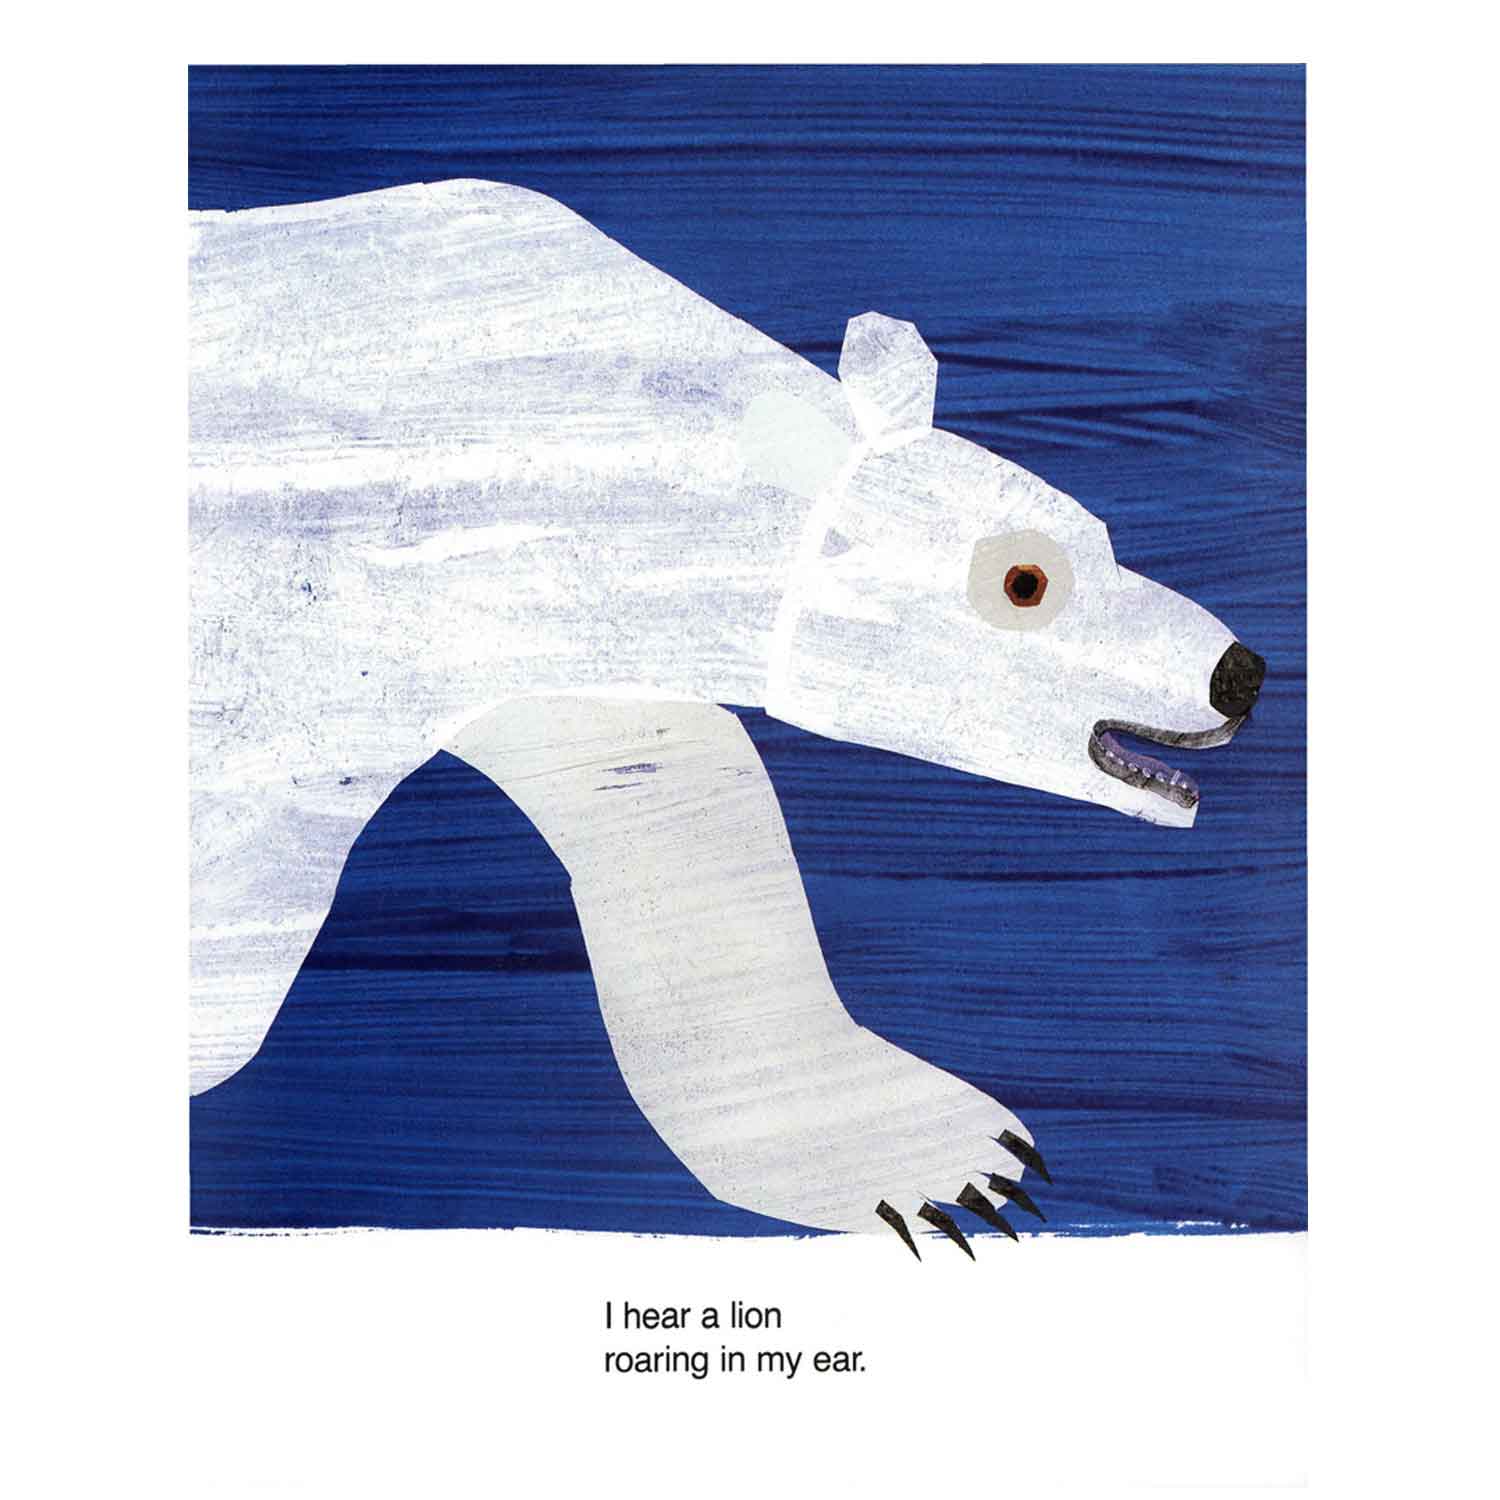 Polar Bear, Polar Bear, What Do You Hear? Big Book